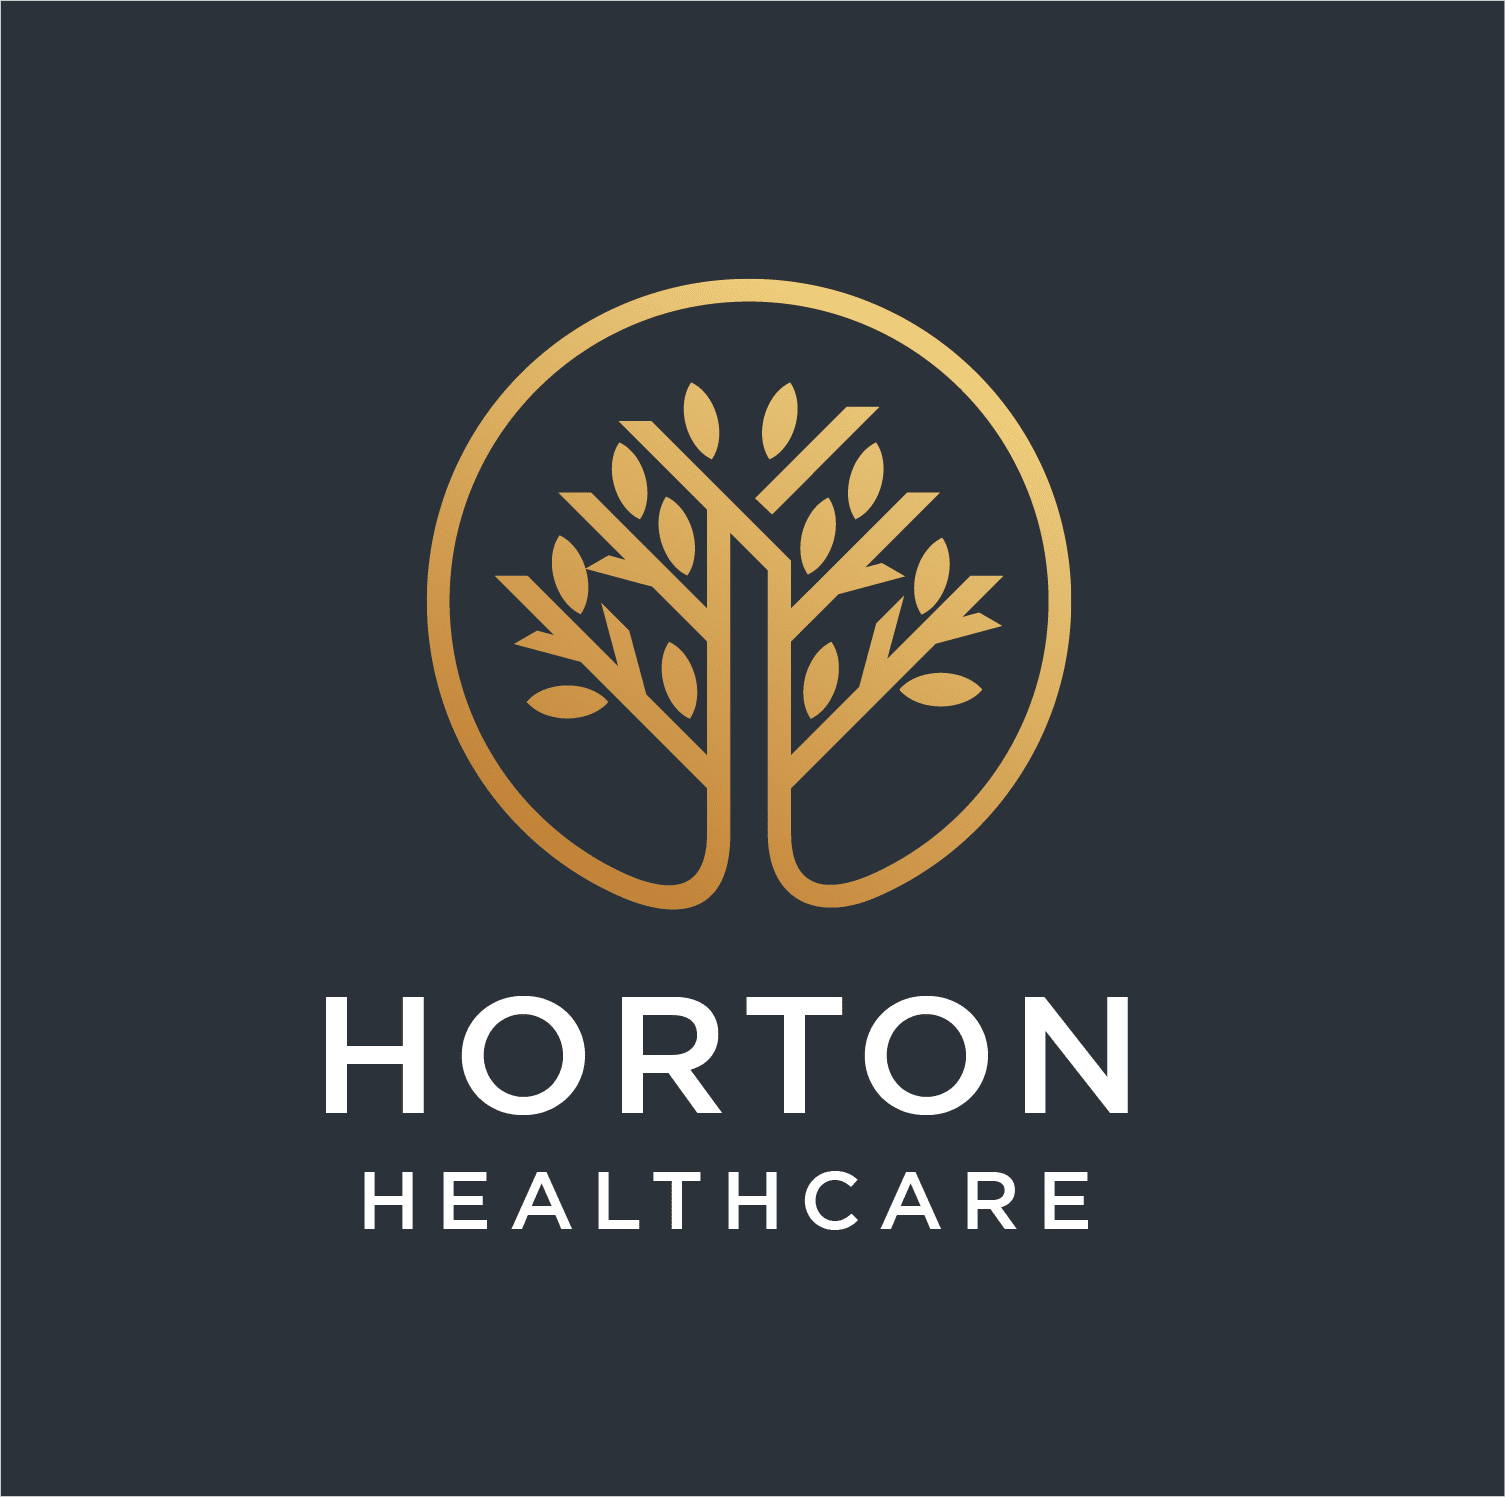 Horton Healthcare